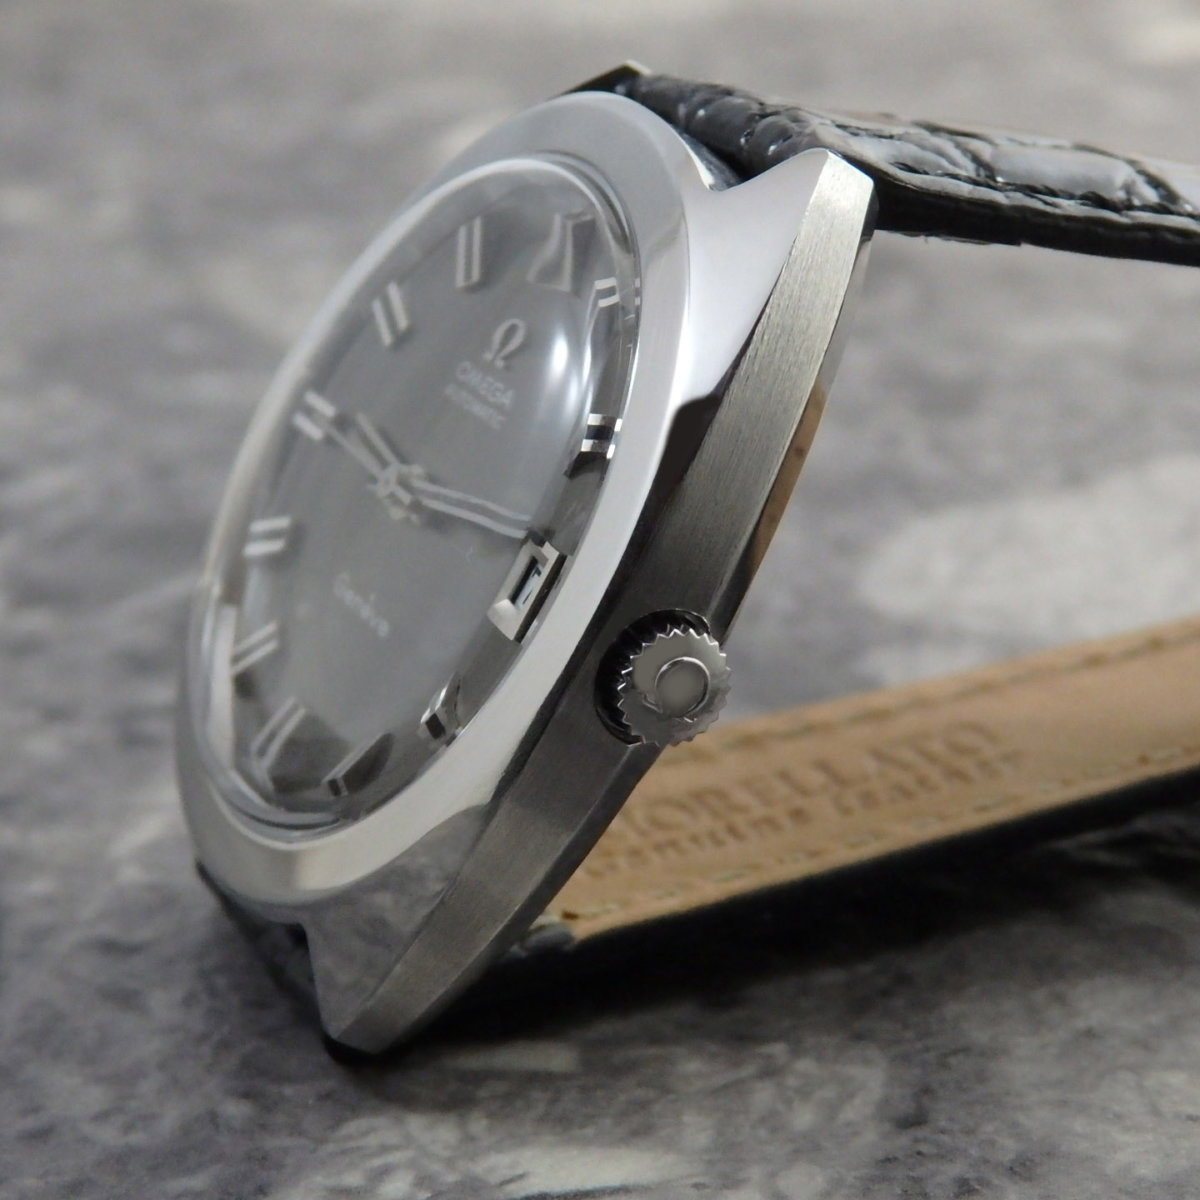 OMEGA ST166.721 アンティーク メンズ腕時計 グレー/Gray文字盤 オメガ 